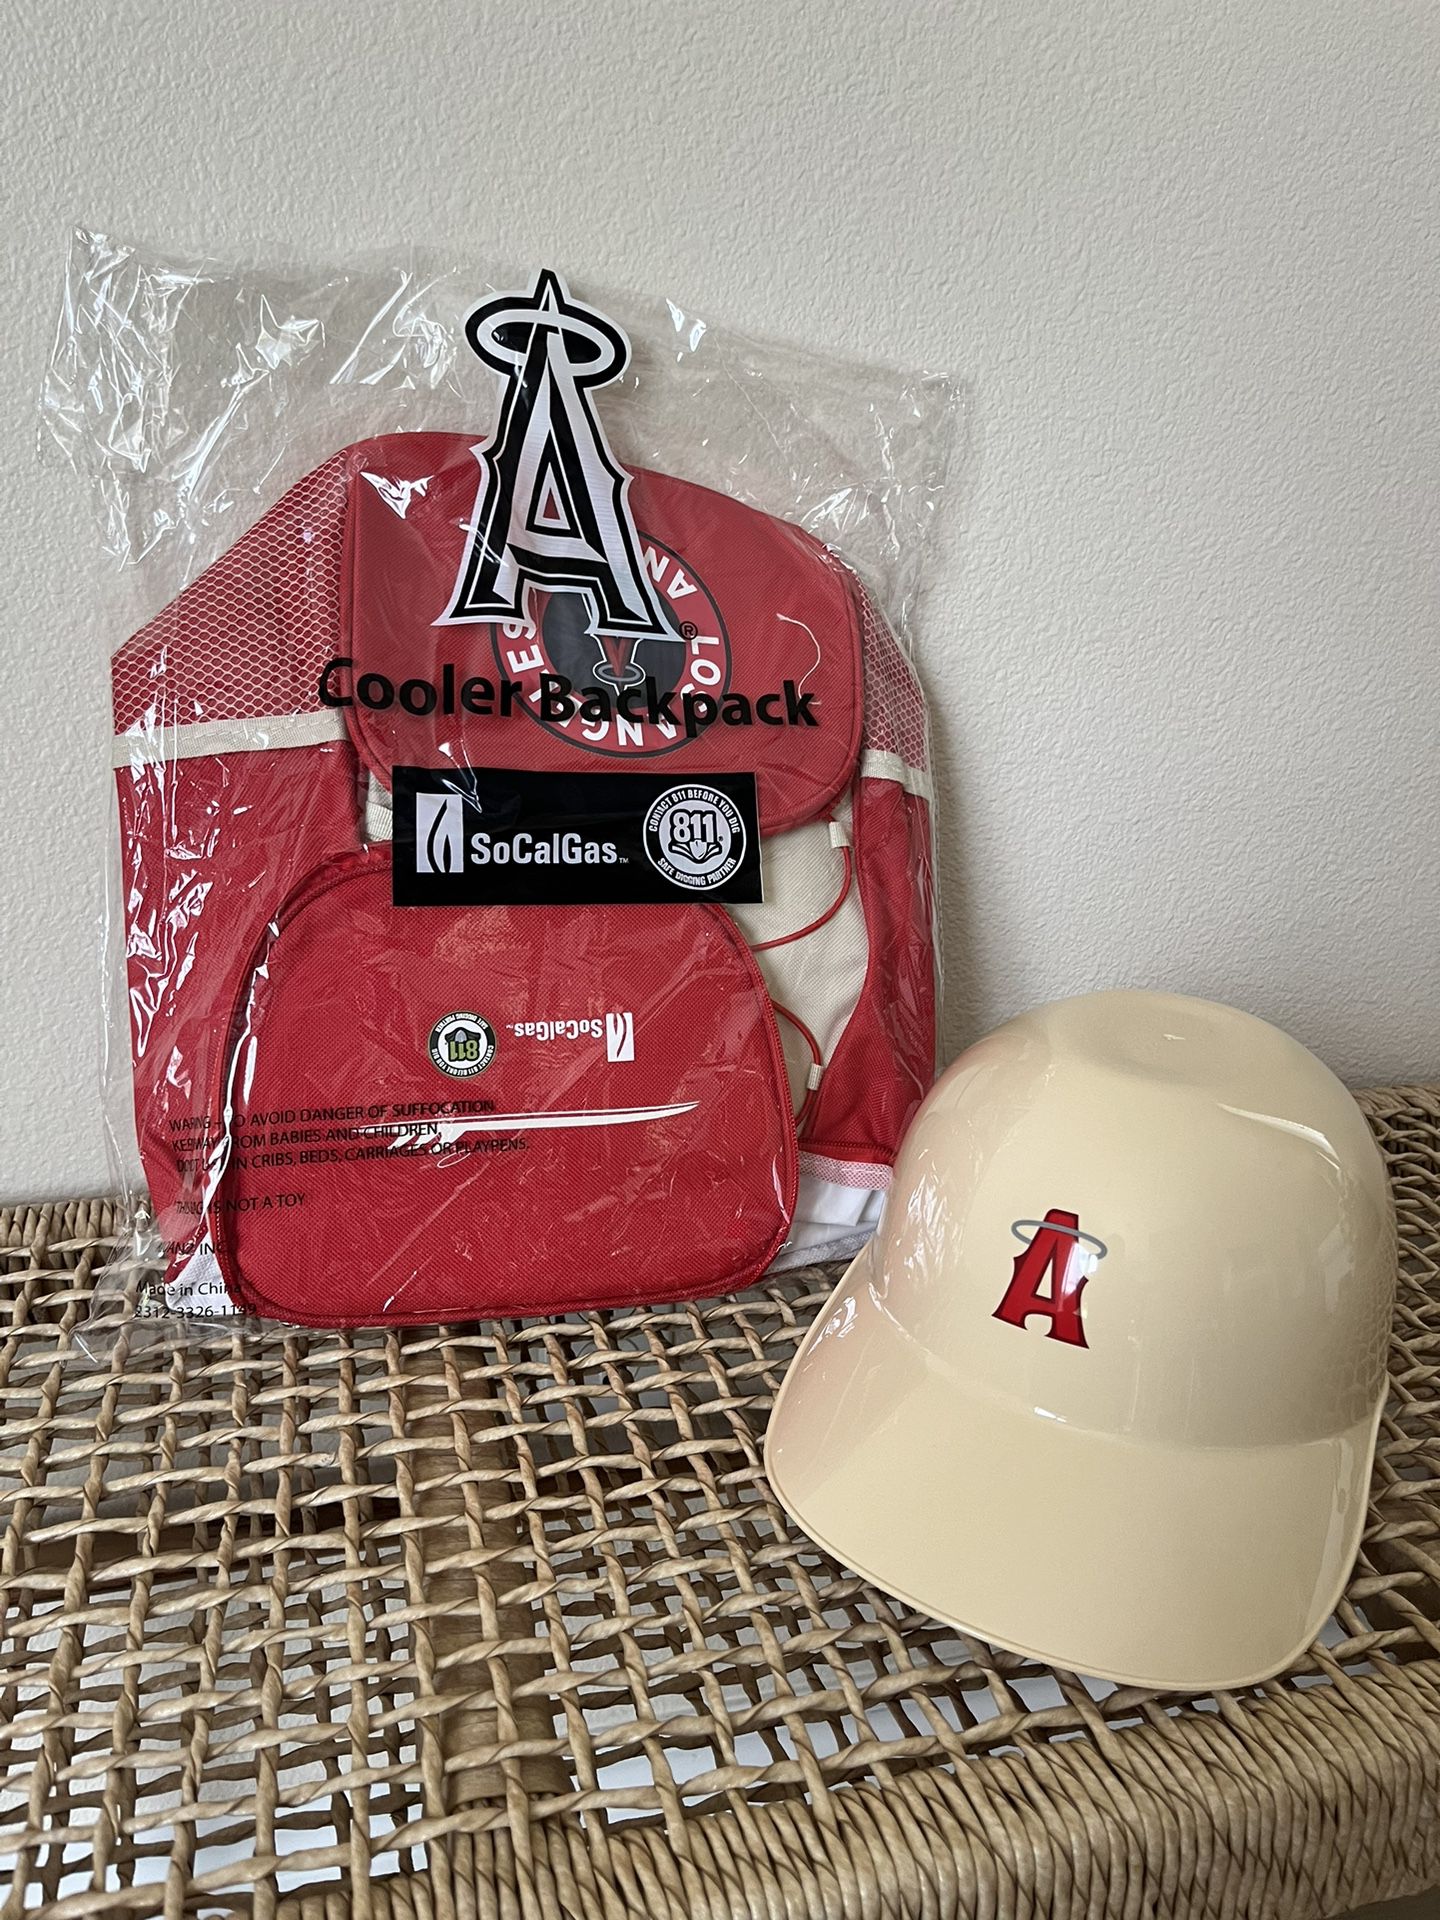 Angels Helmet And Cooler Bag